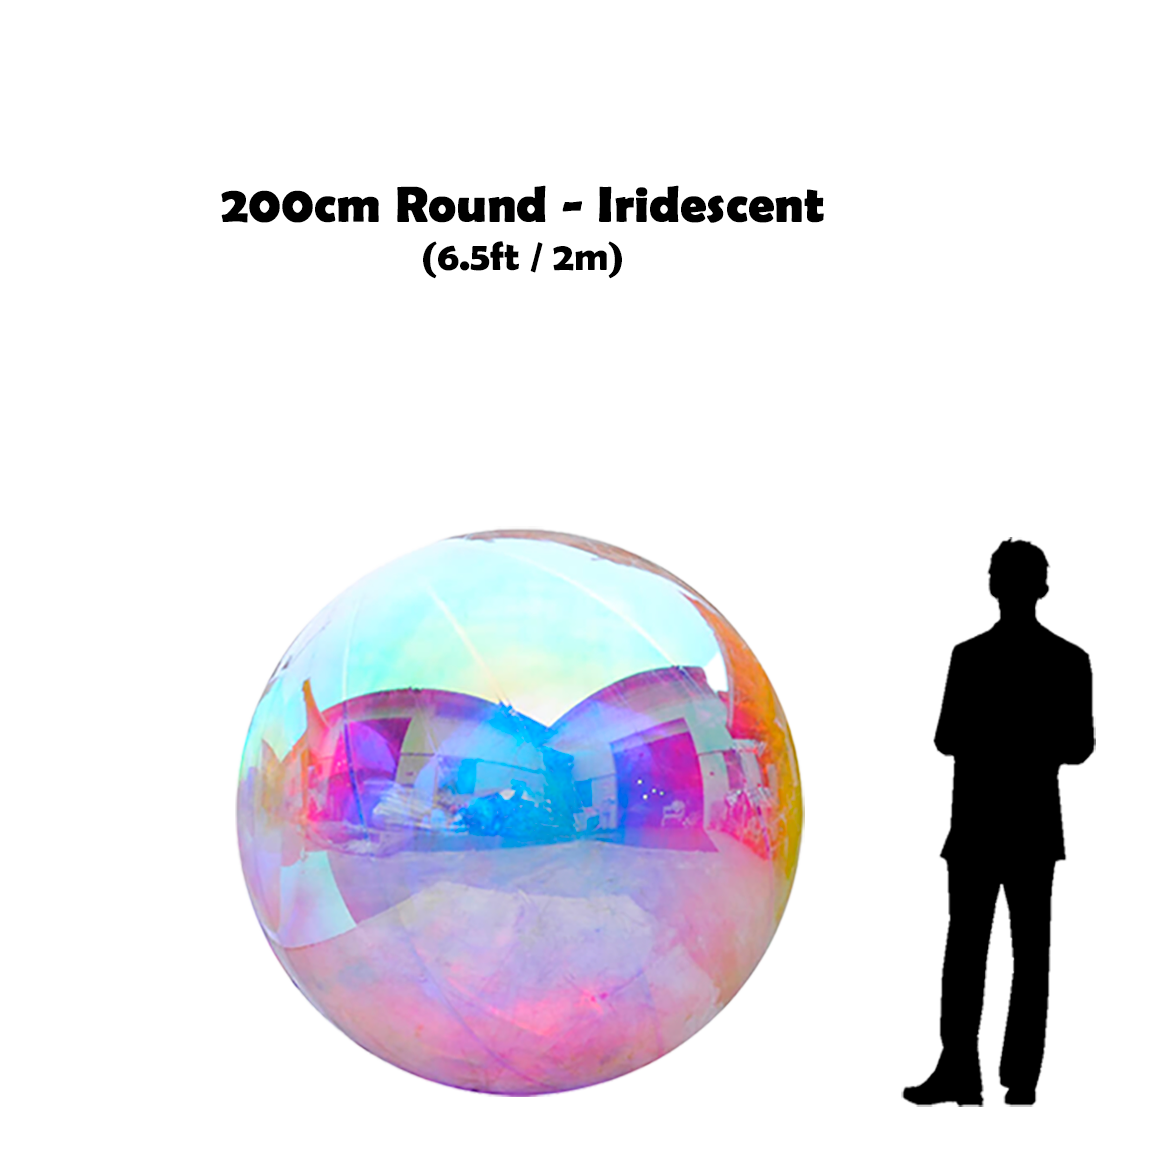 200cm Big iridescent ball beside 5'10 guy silhouette 